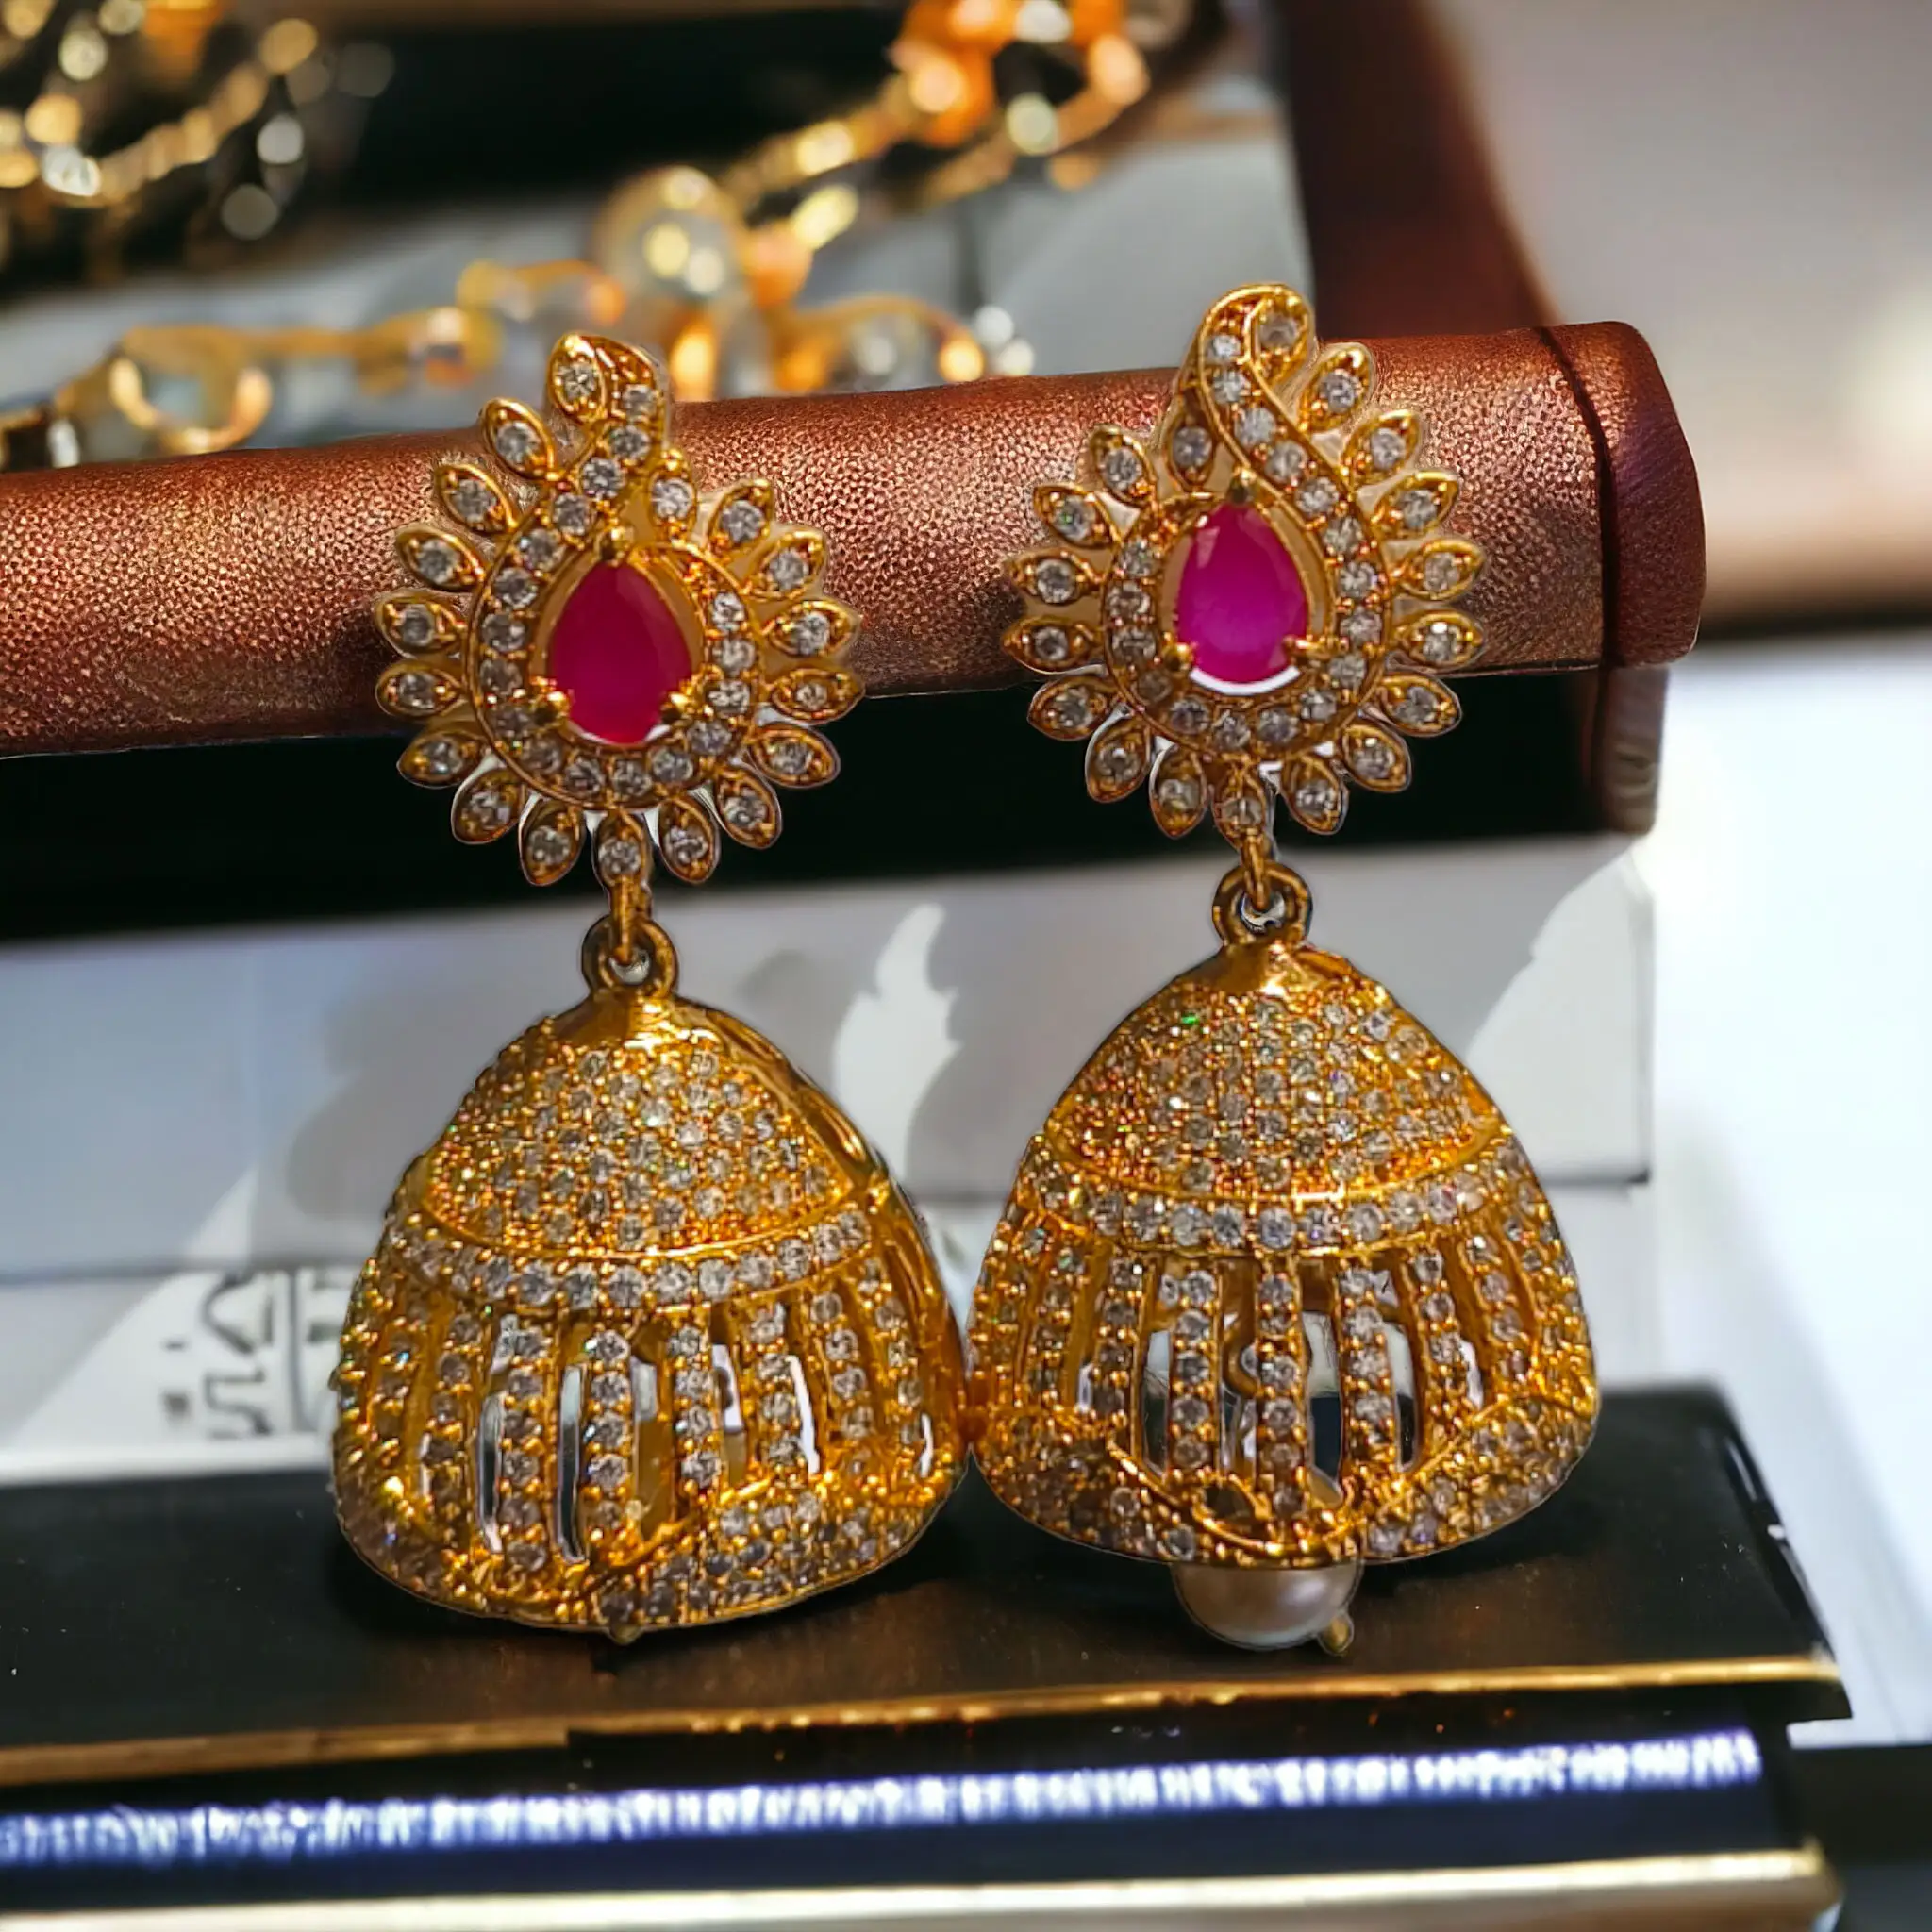 Fornecedor de joias indiano fabricante de brincos para mulheres Bollywood ouro tonalidade pavão pendurado Chandbali Jhumka